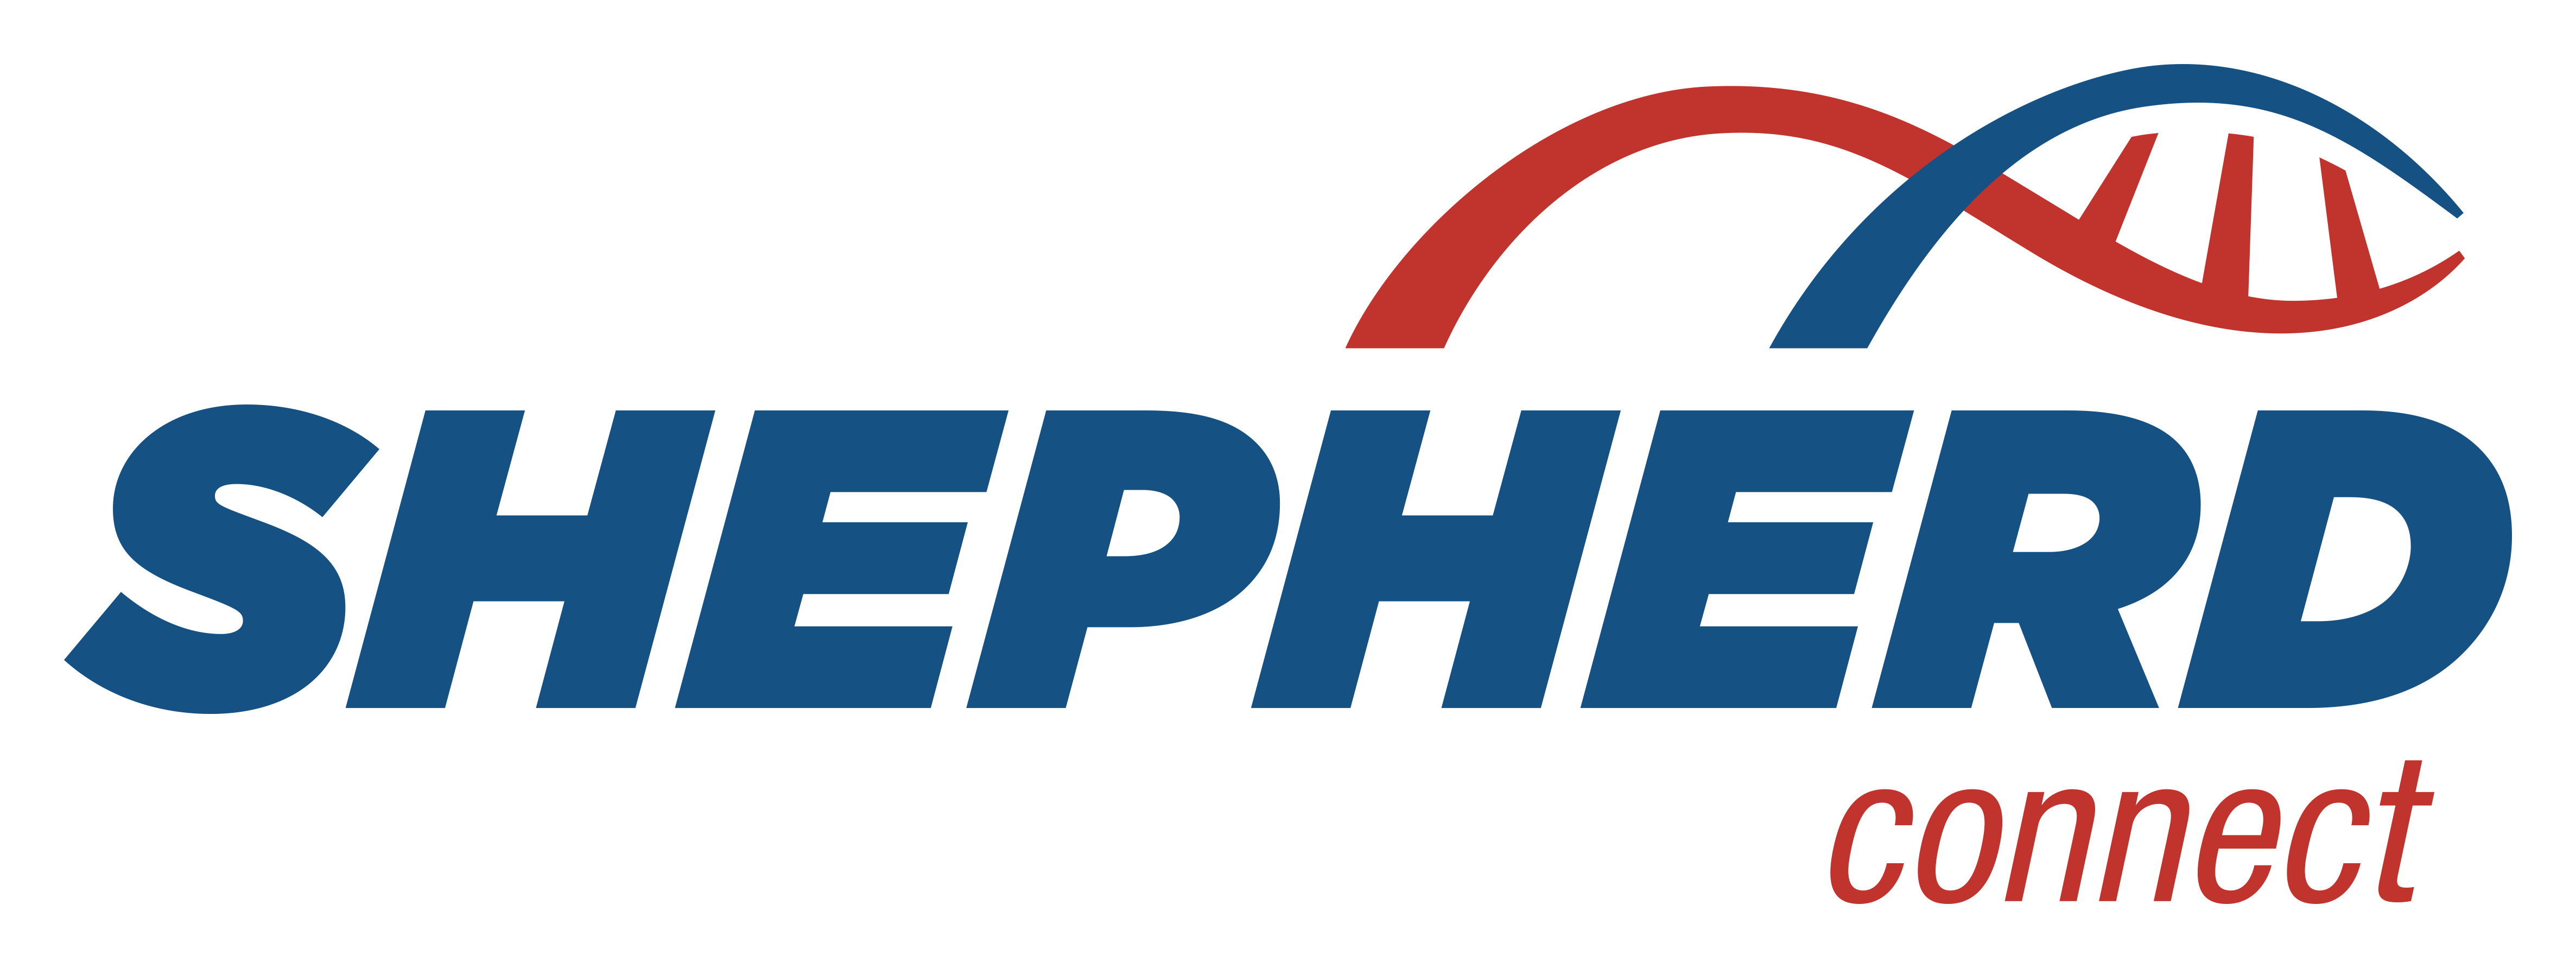 Shepherd Connect logo